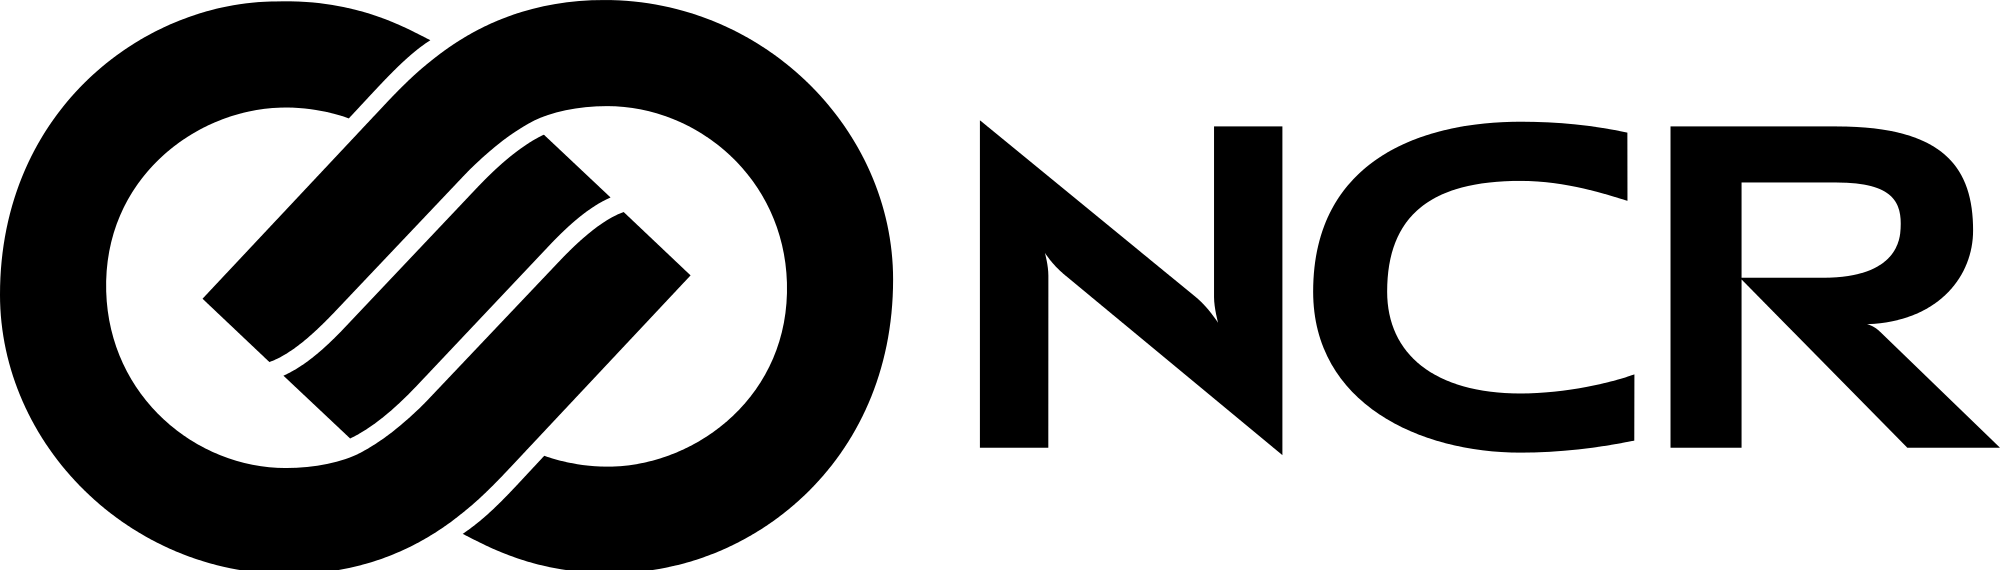 NCR Corporation Logo - File:NCR logo black.svg - Wikimedia Commons